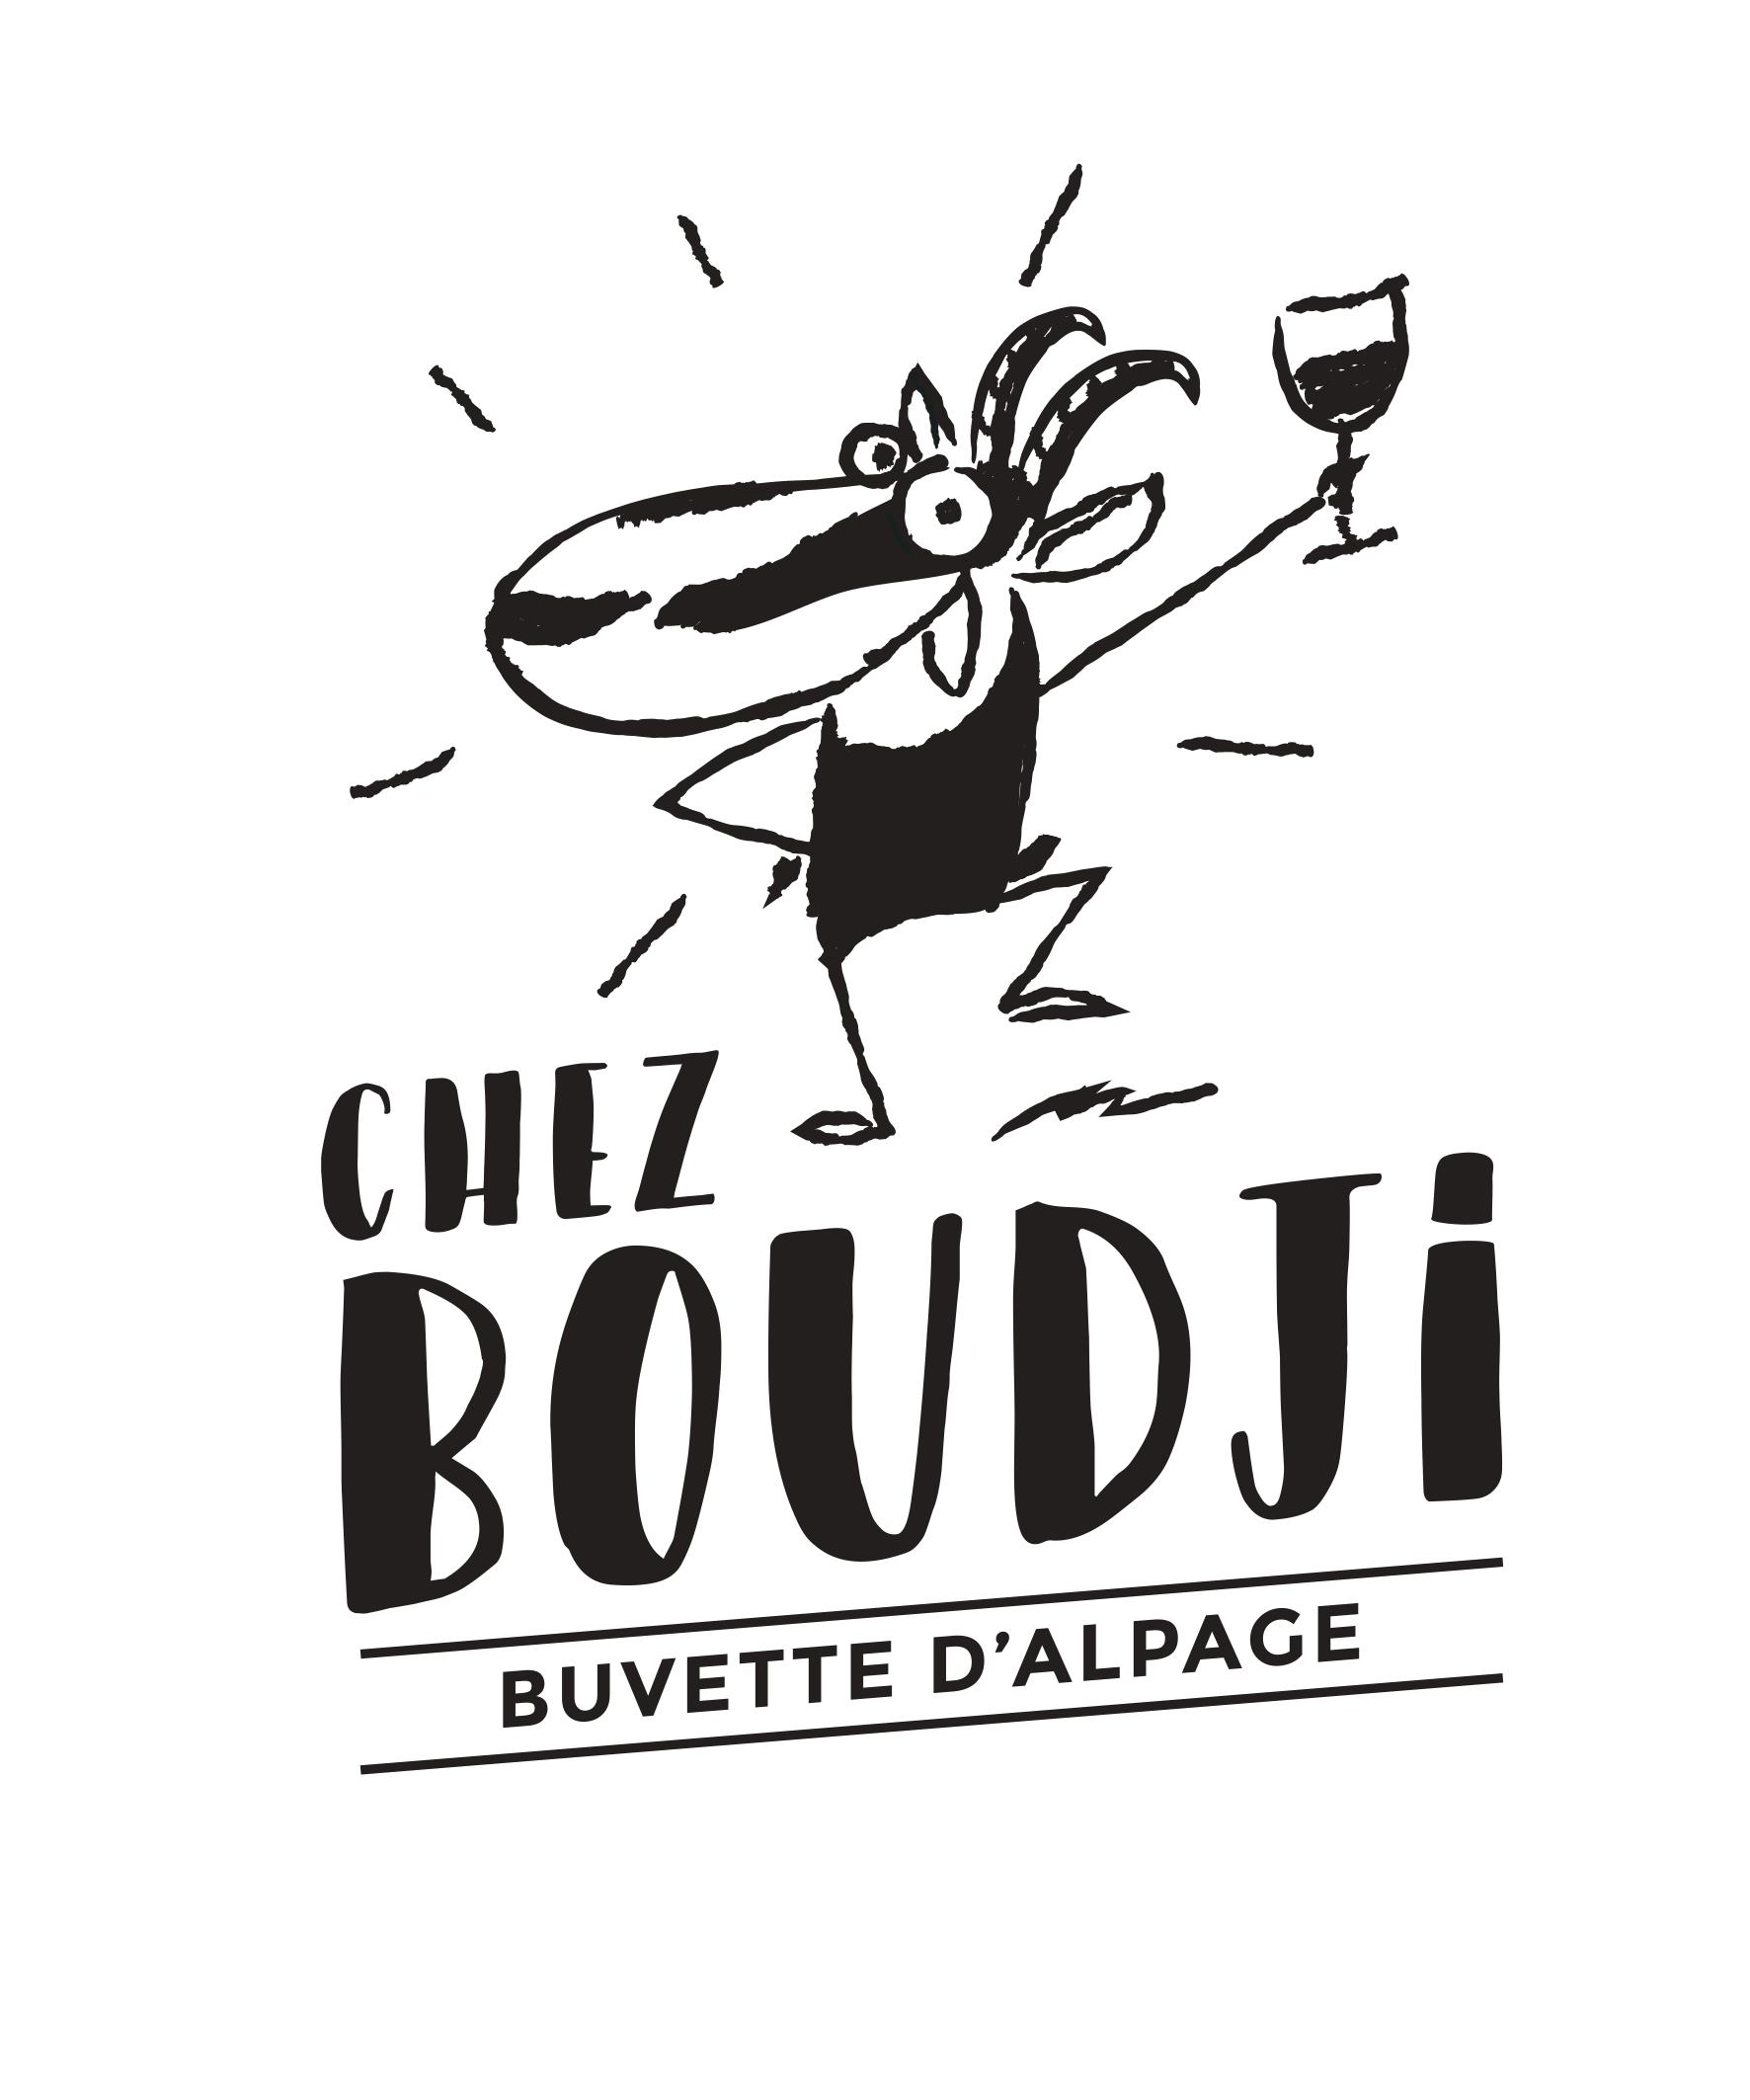 Buvette d'alpage Chez Boudji